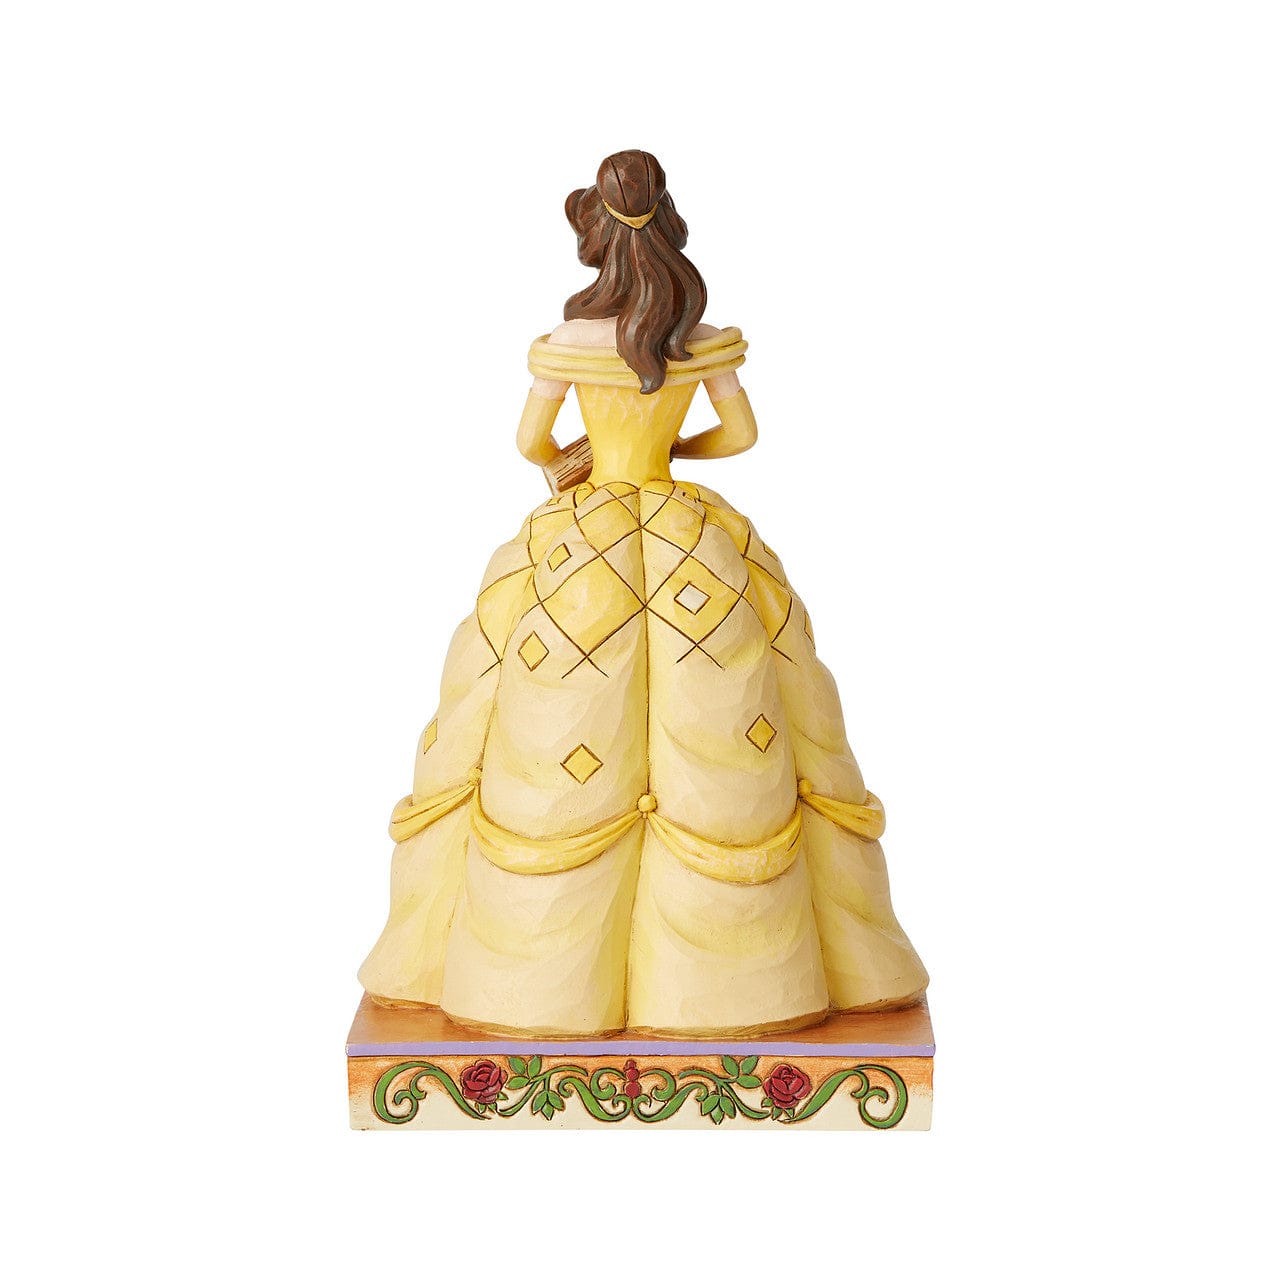 Disney Disney Ornament Disney Traditions Figurine - Princess Belle Book-Smart Beauty